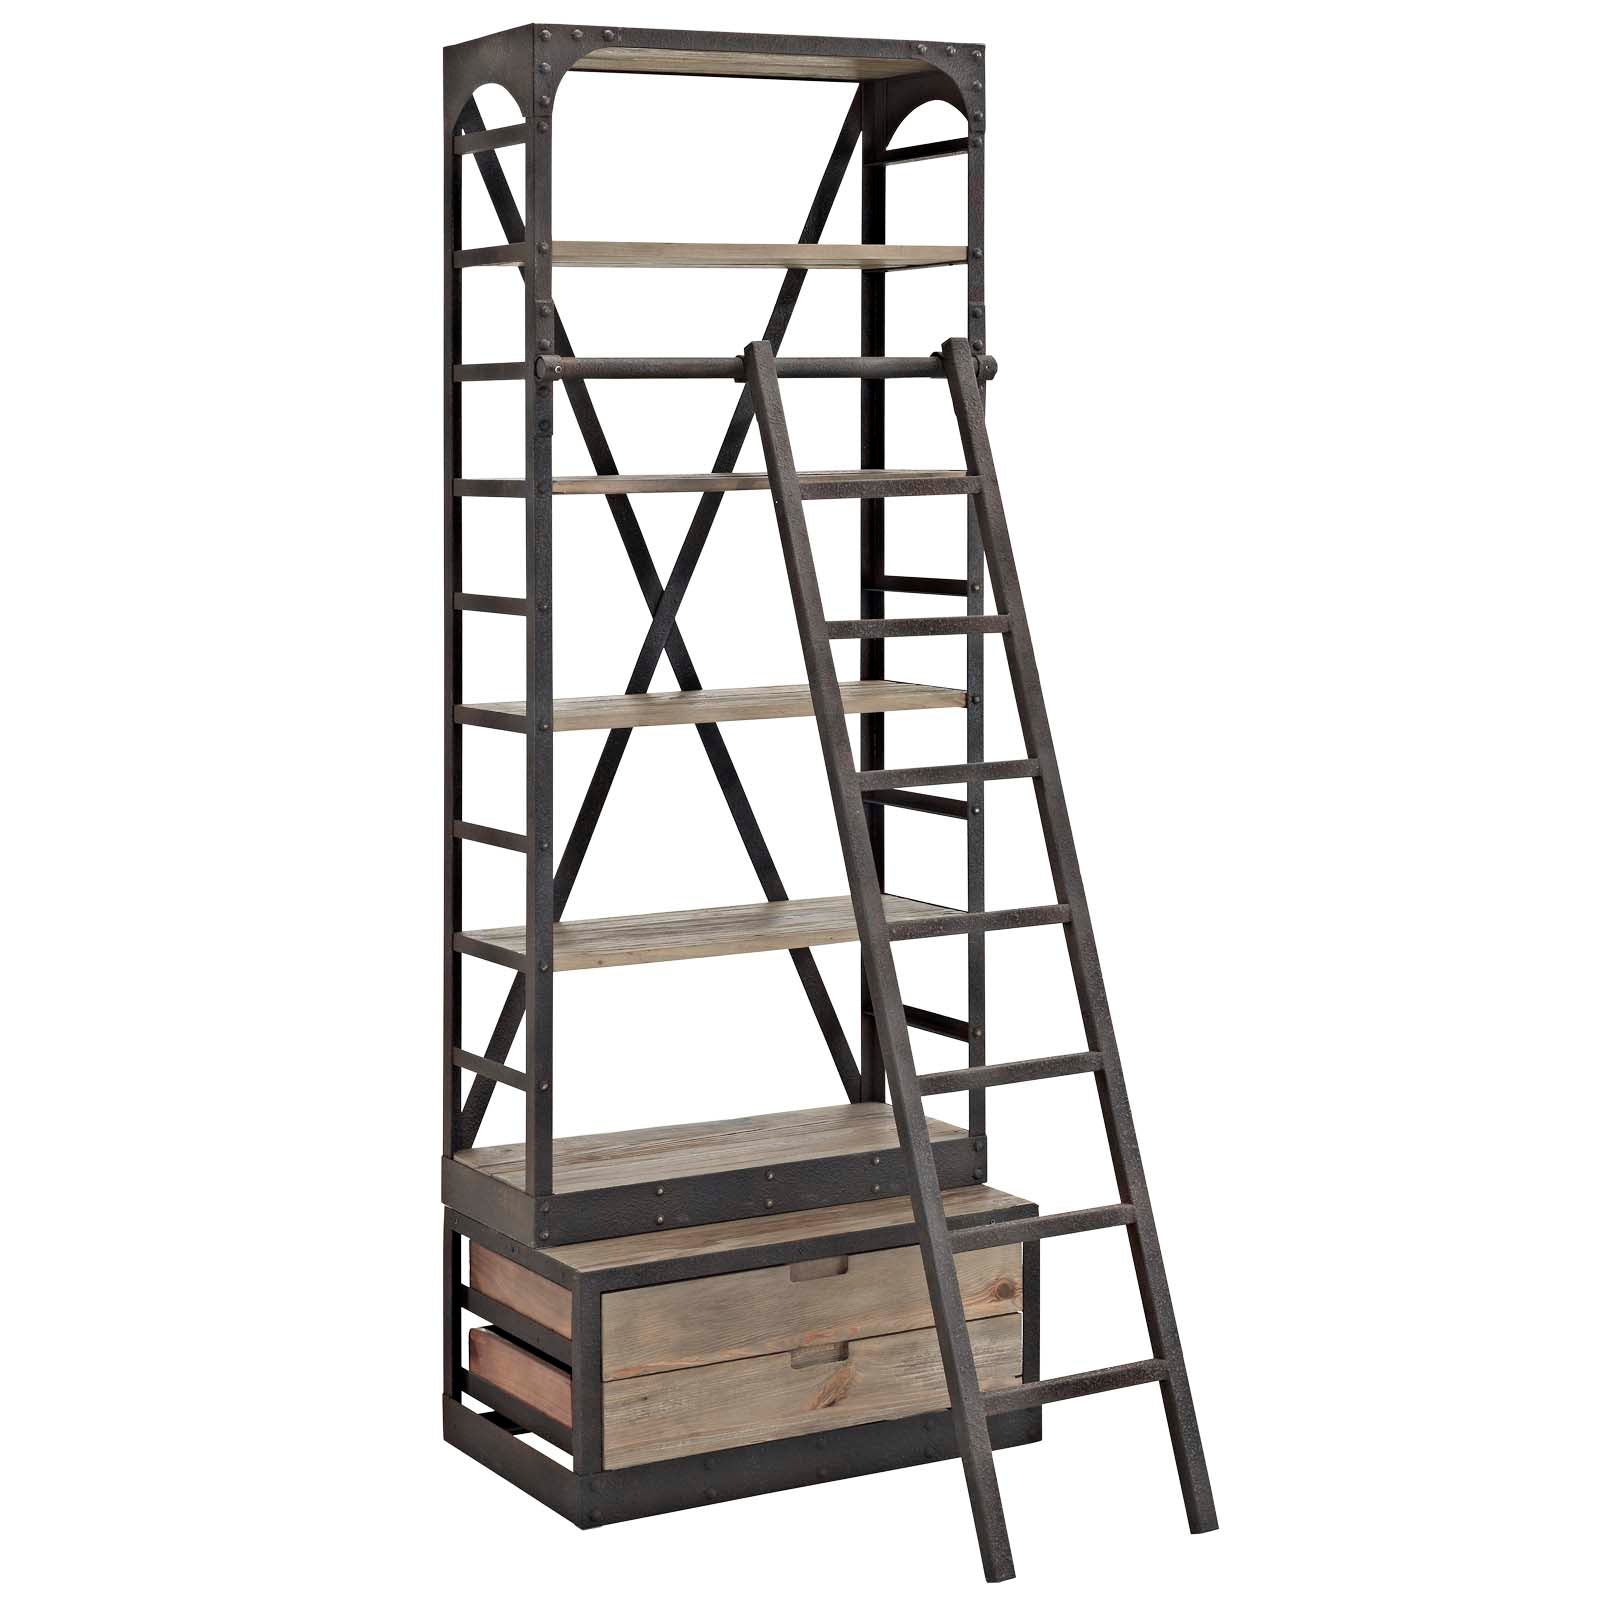 Industrial Velocity Wood Bookshelf Display Storage Cabinet - Ladder Set Storage Shelves